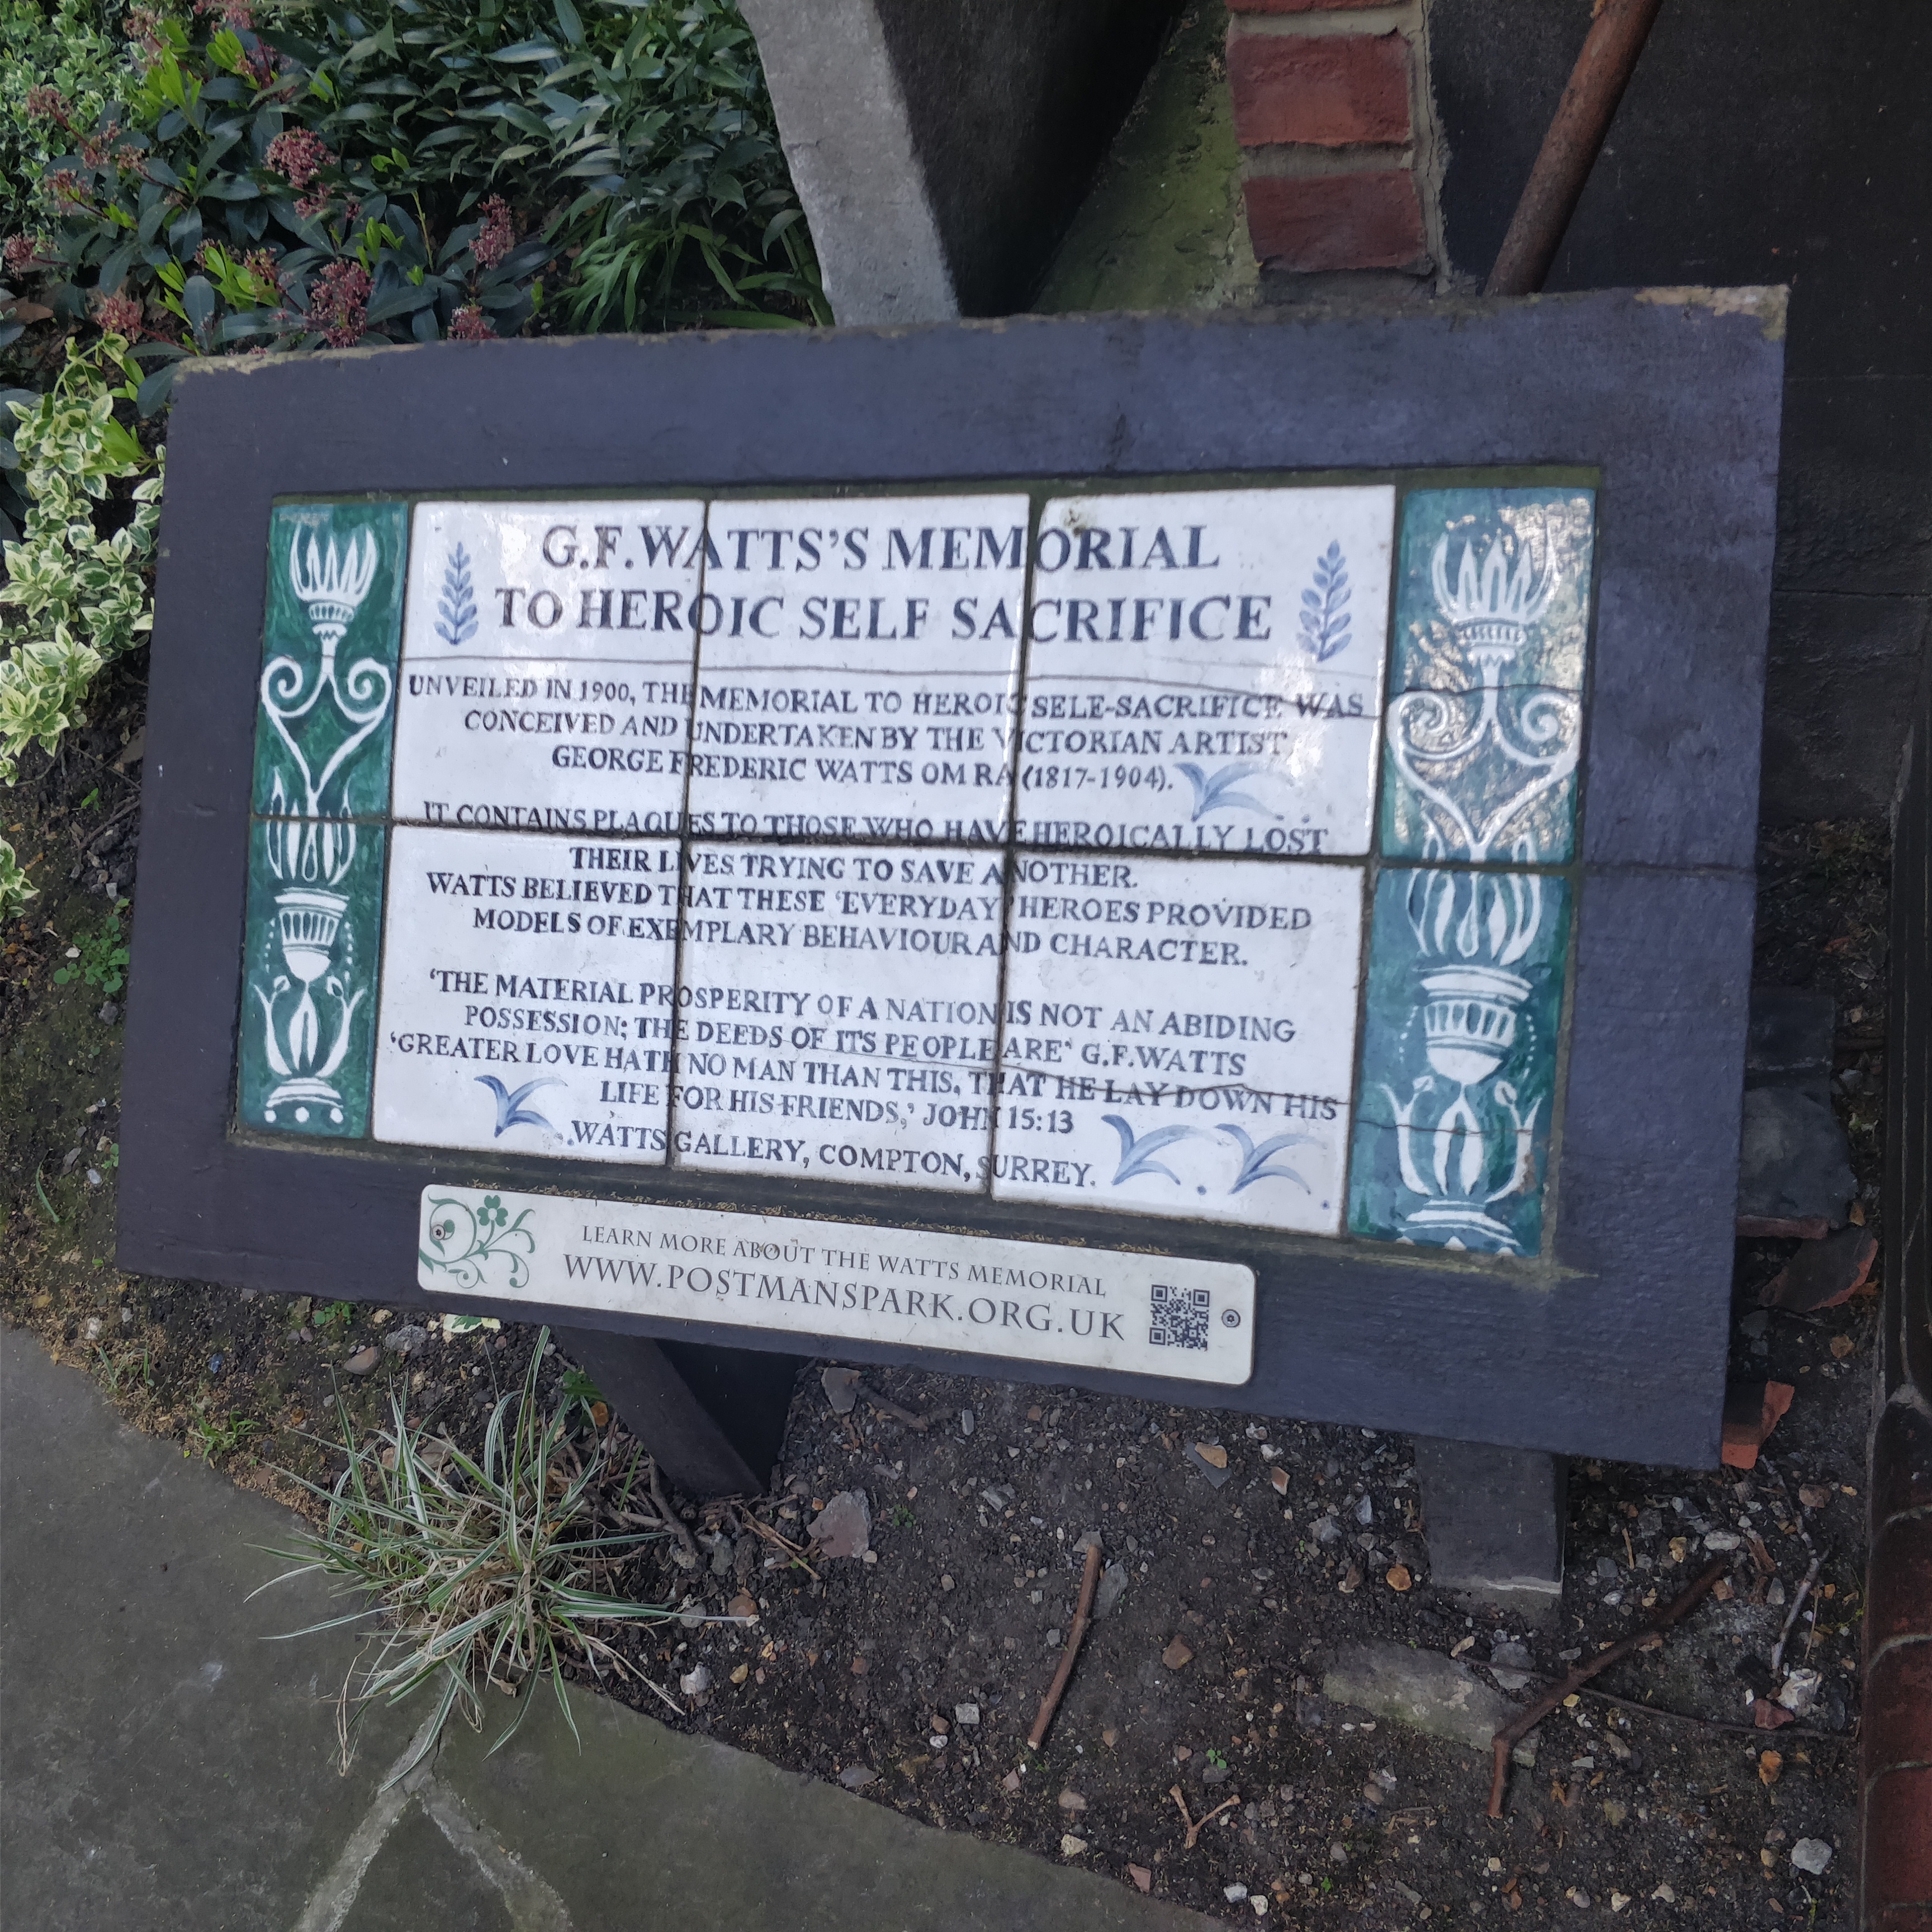 A plaque denoting GF Watt's Memorial to Self-Sacrifice 